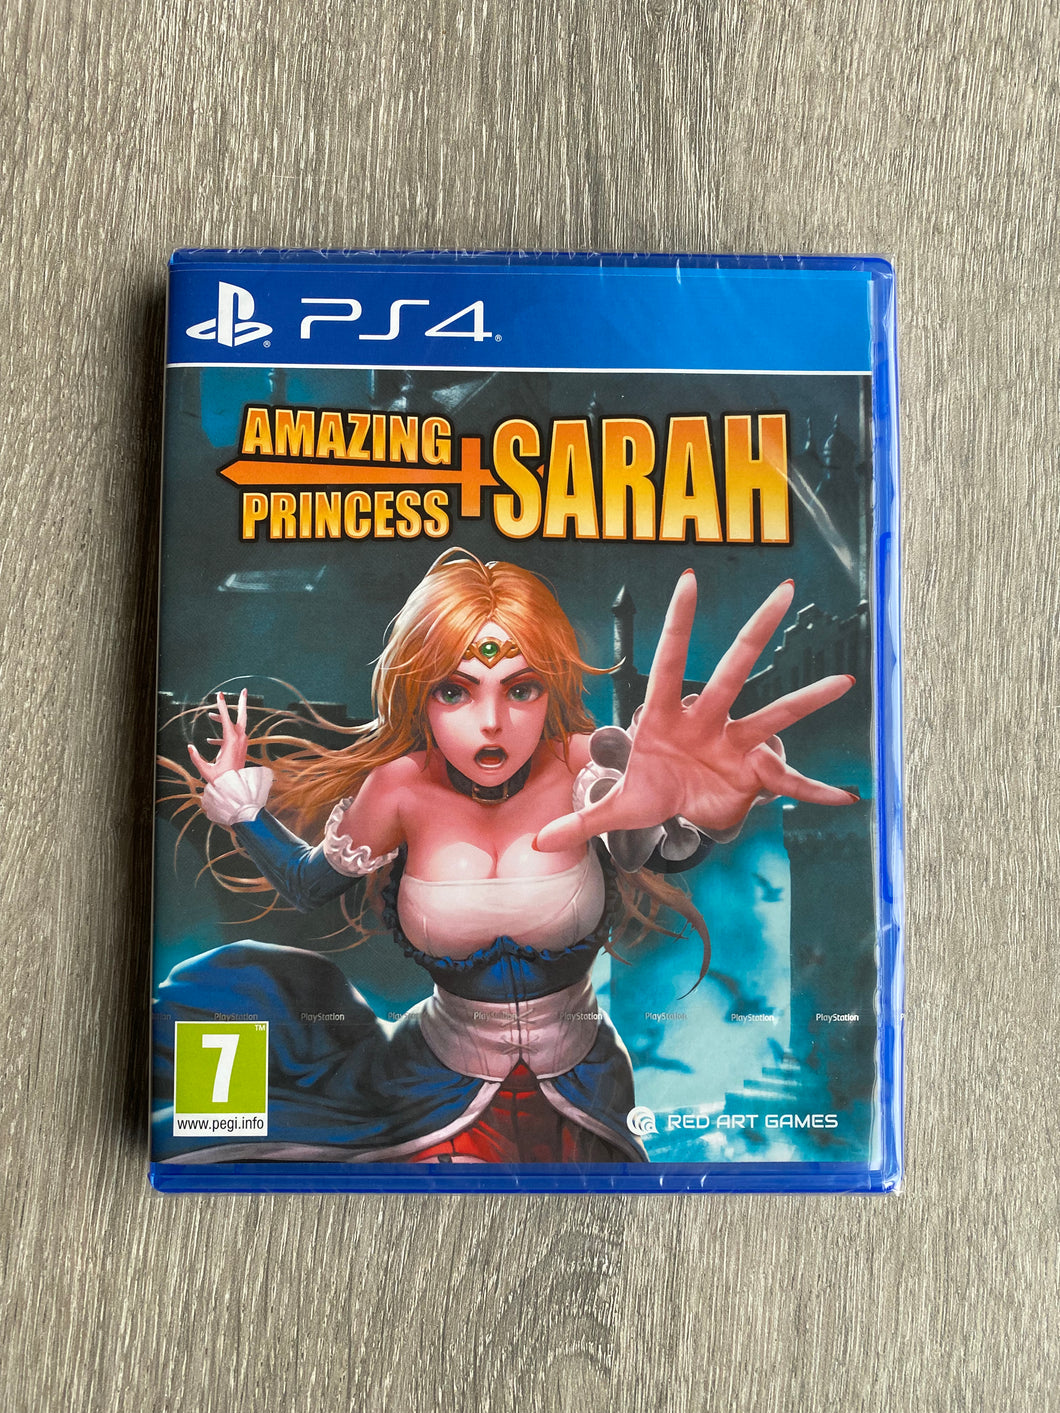 Amazing princess Sarah / Red art games / Red art games / 999 copies